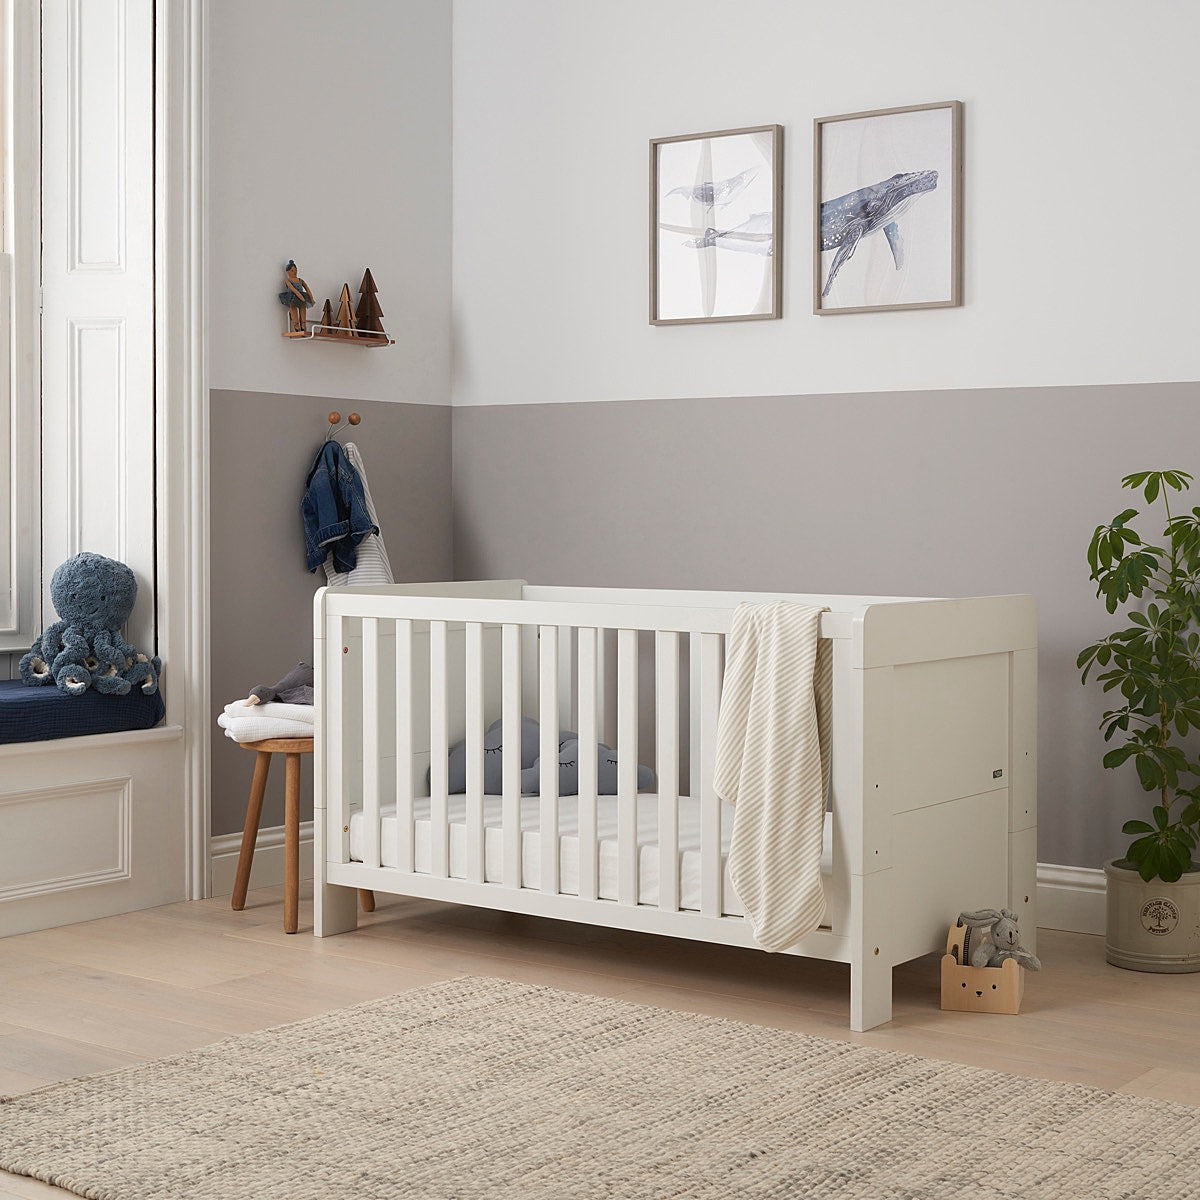 Tutti Bambini Essentials Alba Cot Bed - White - For Your Little One